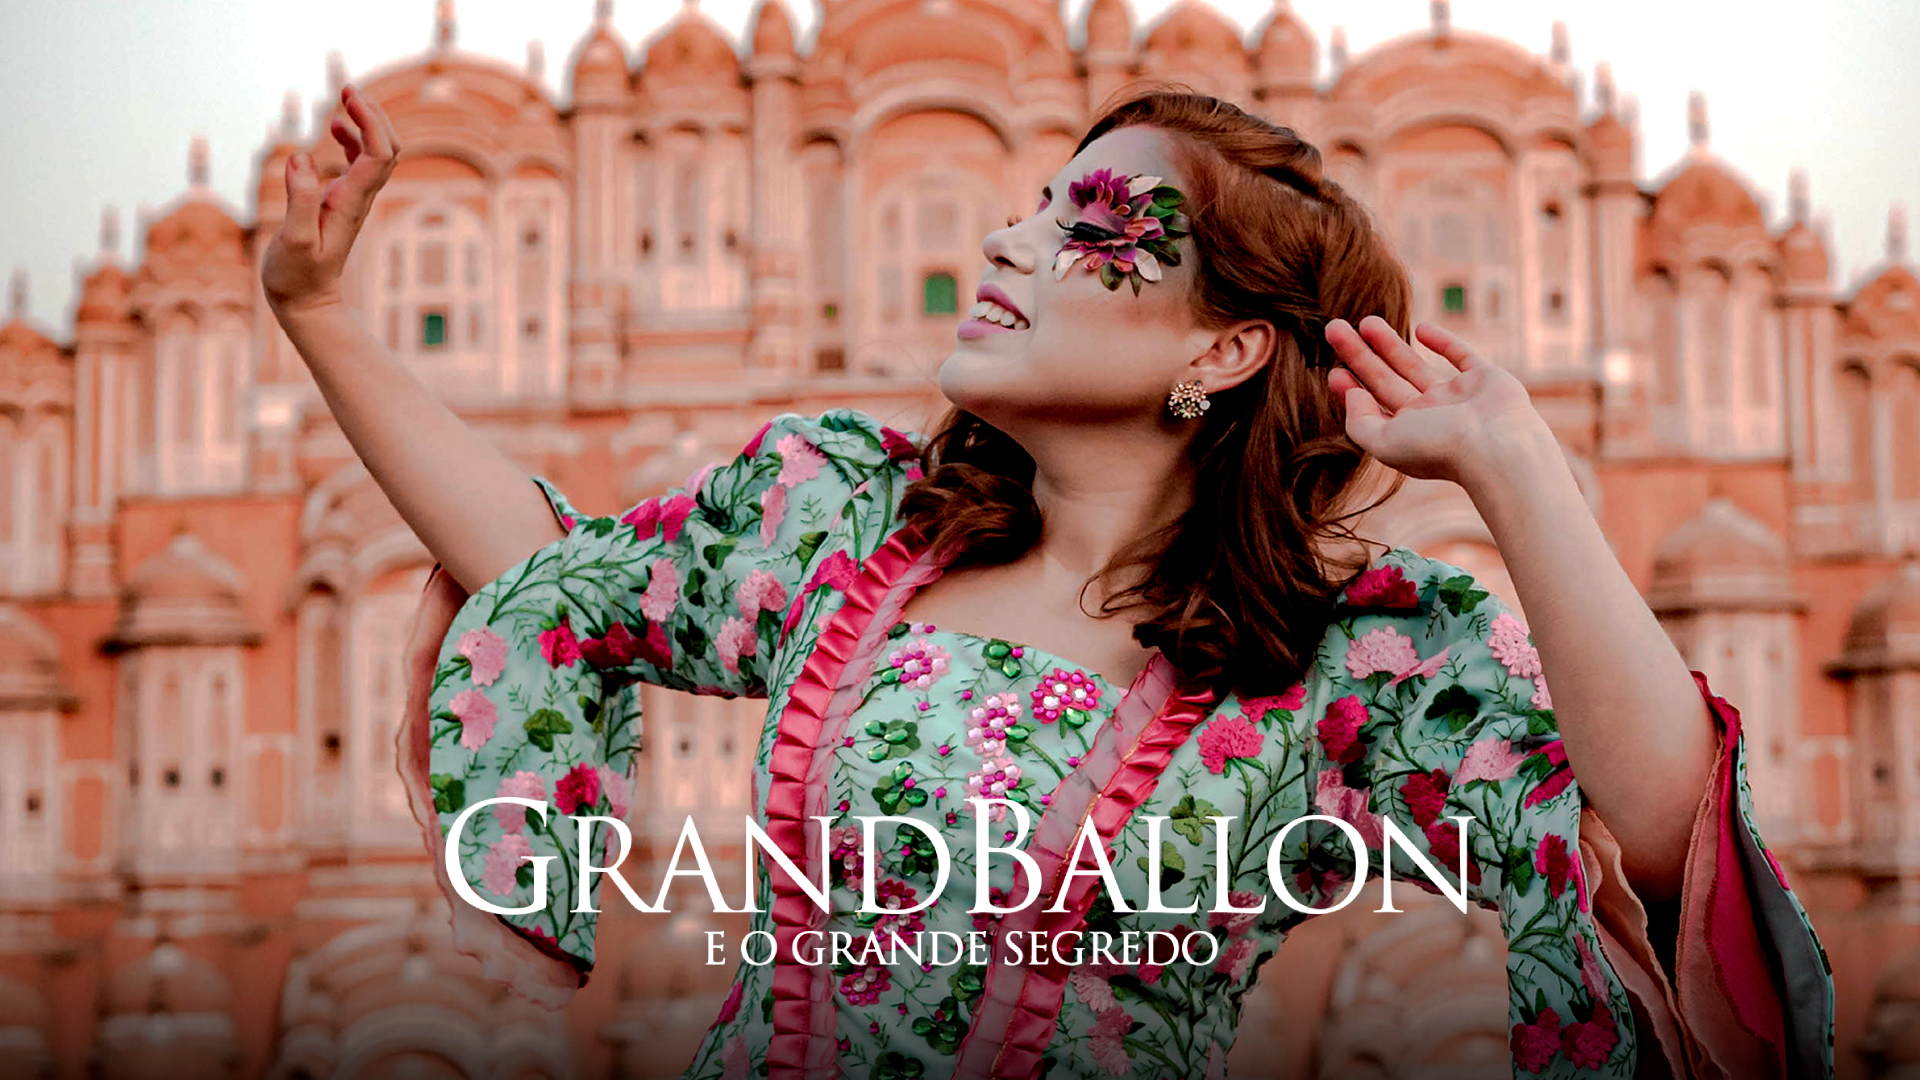 Grand Ballon - Horizontal CompletoHorizontal